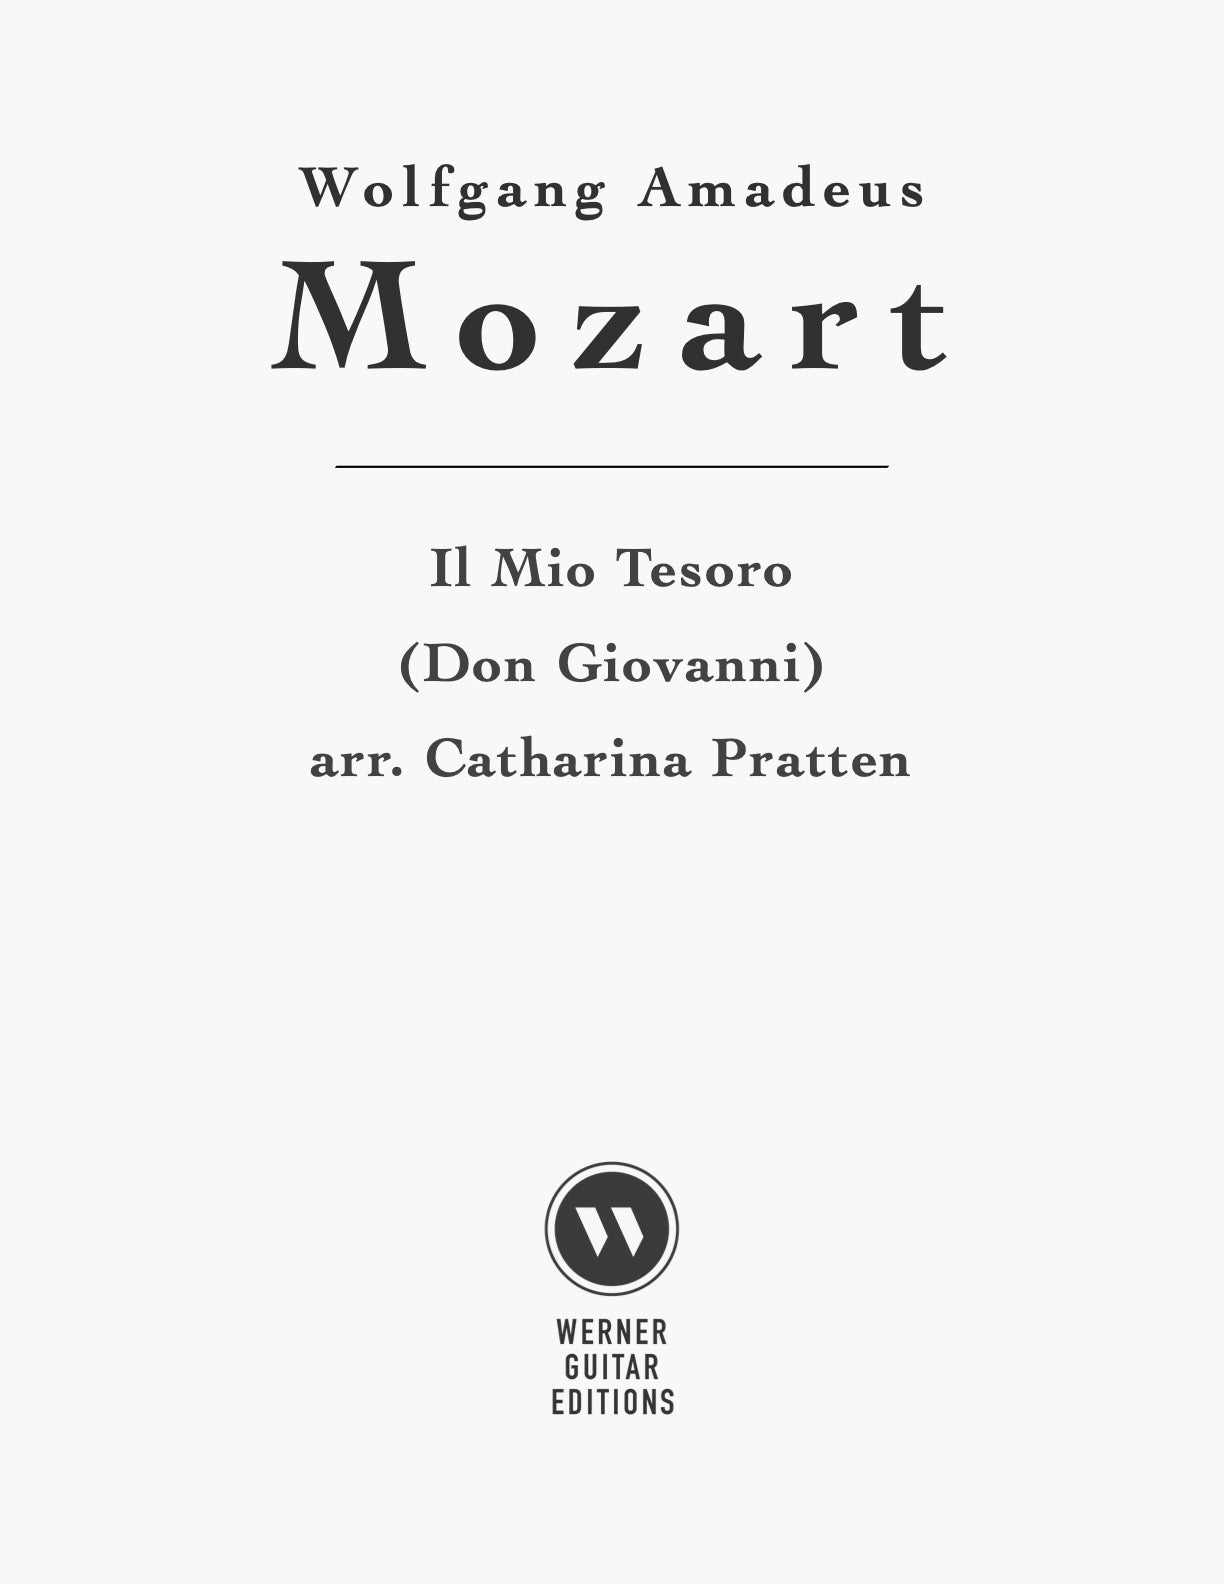 Il Mio Tesoro by Mozart, arr. Pratten for Guitar(PDF)